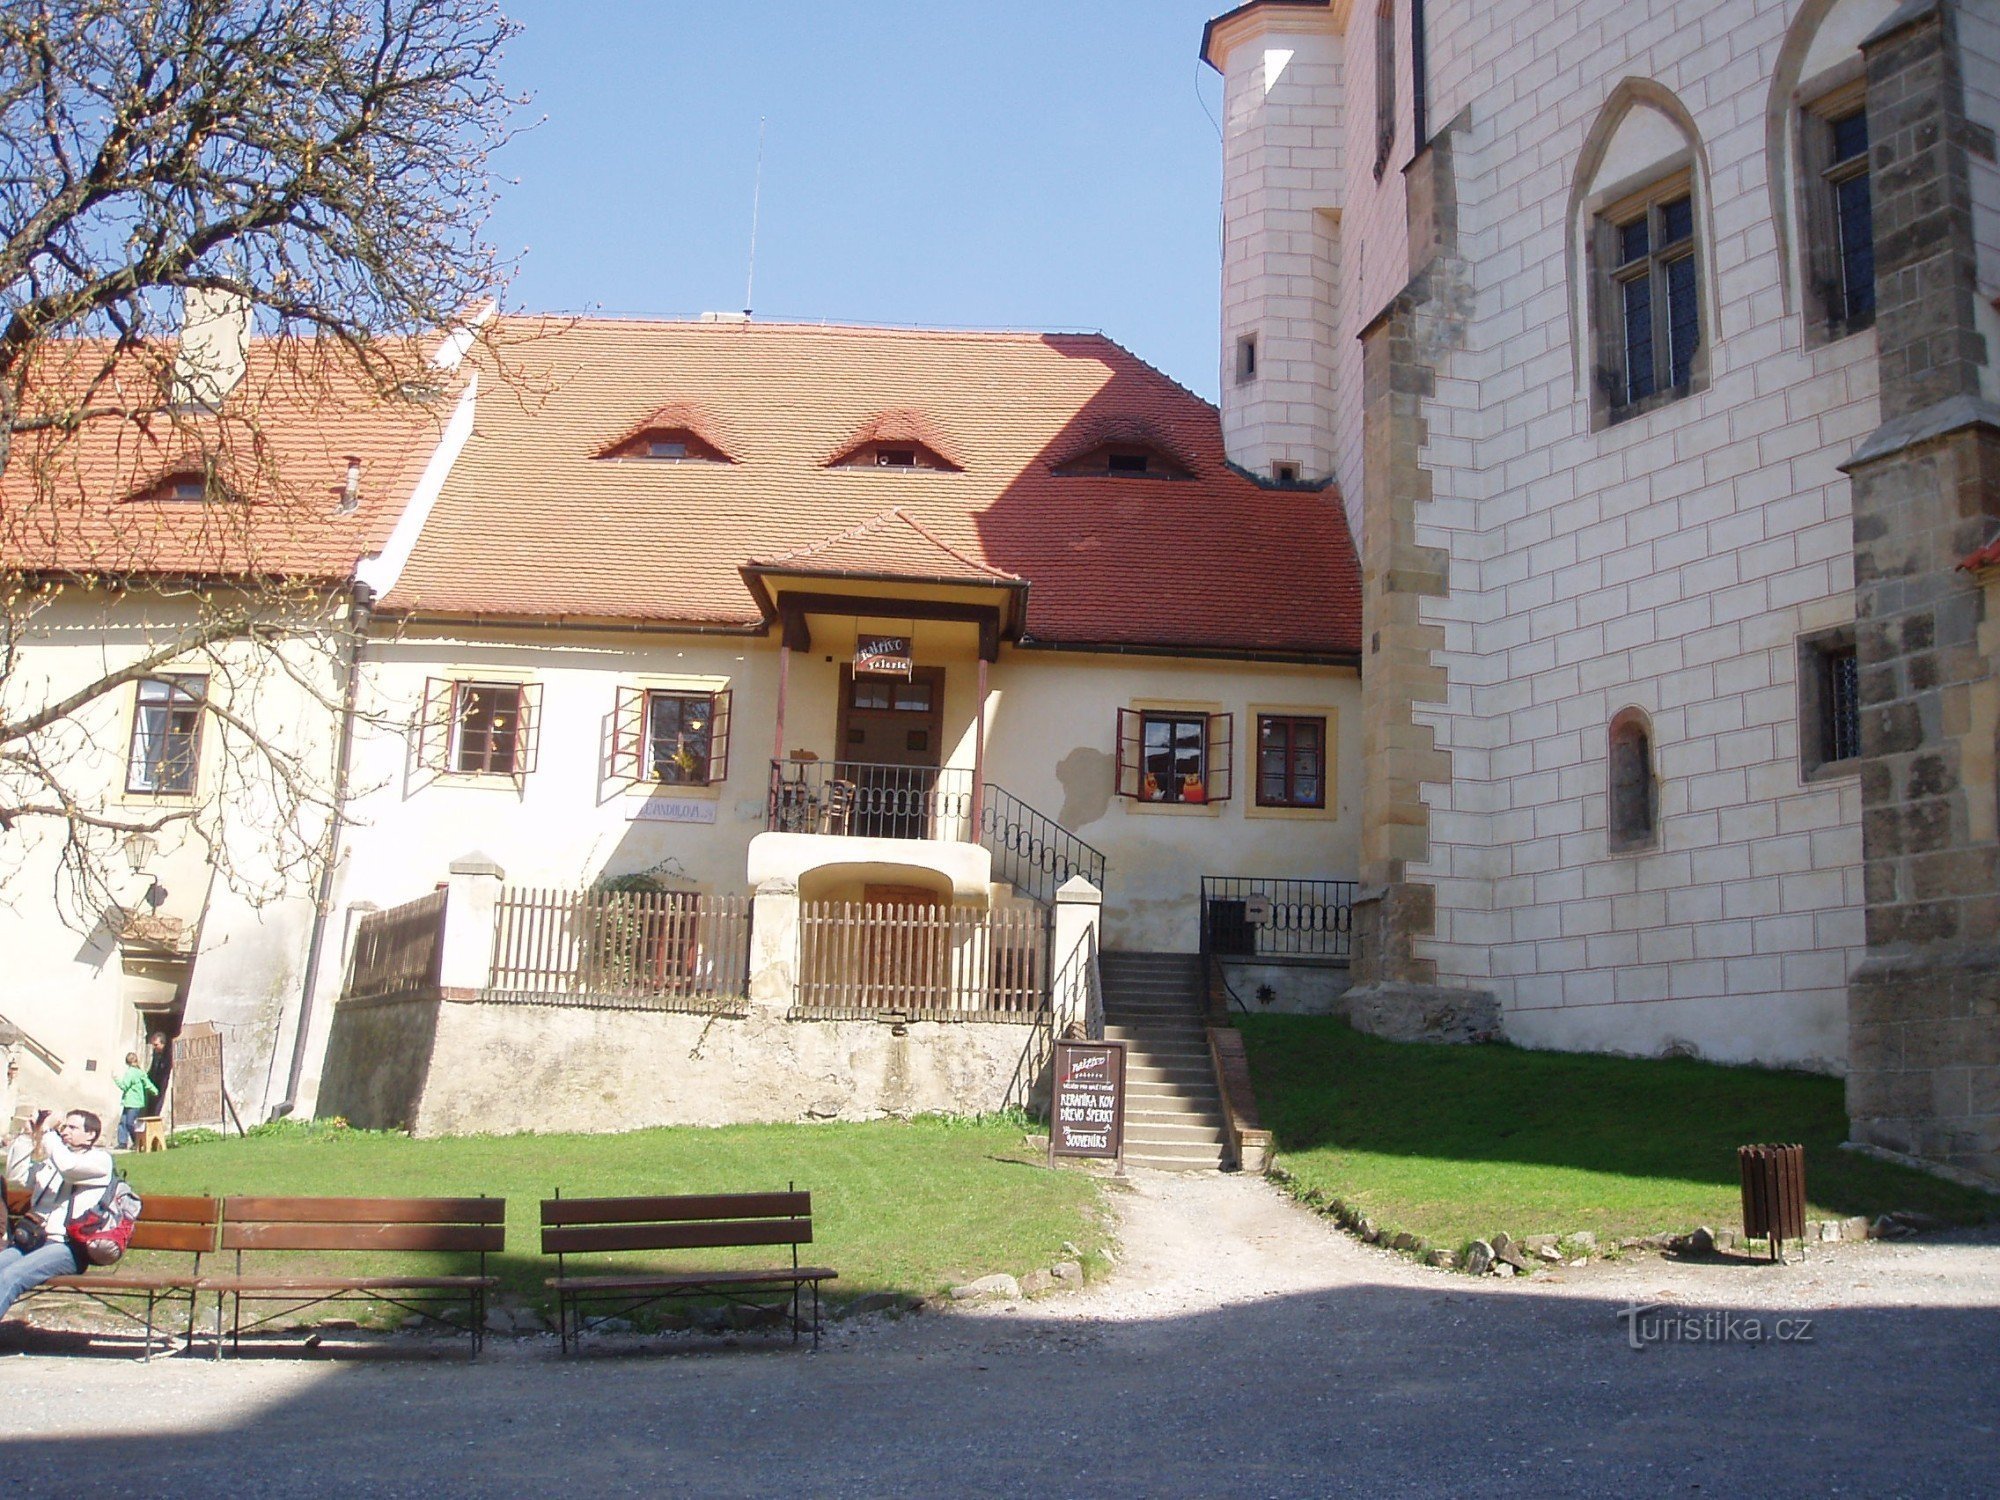 Castelo Estadual de Křivoklát